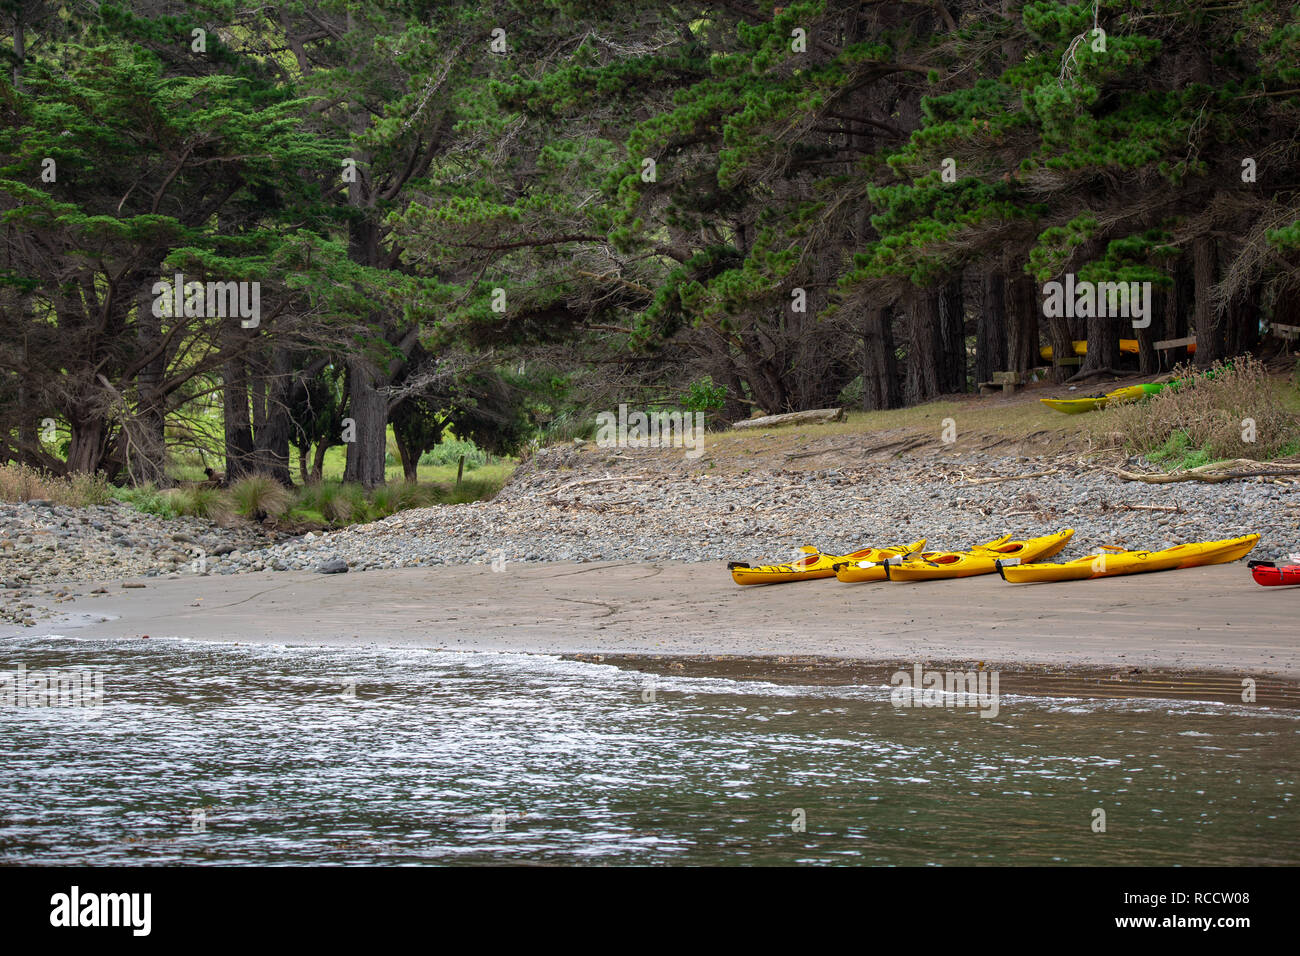 Flea Bay, Banks Peninsula, New Zealand - January 6 2019: kayaks on the beach ready for tourist to go on a wildlife adventure Stock Photo